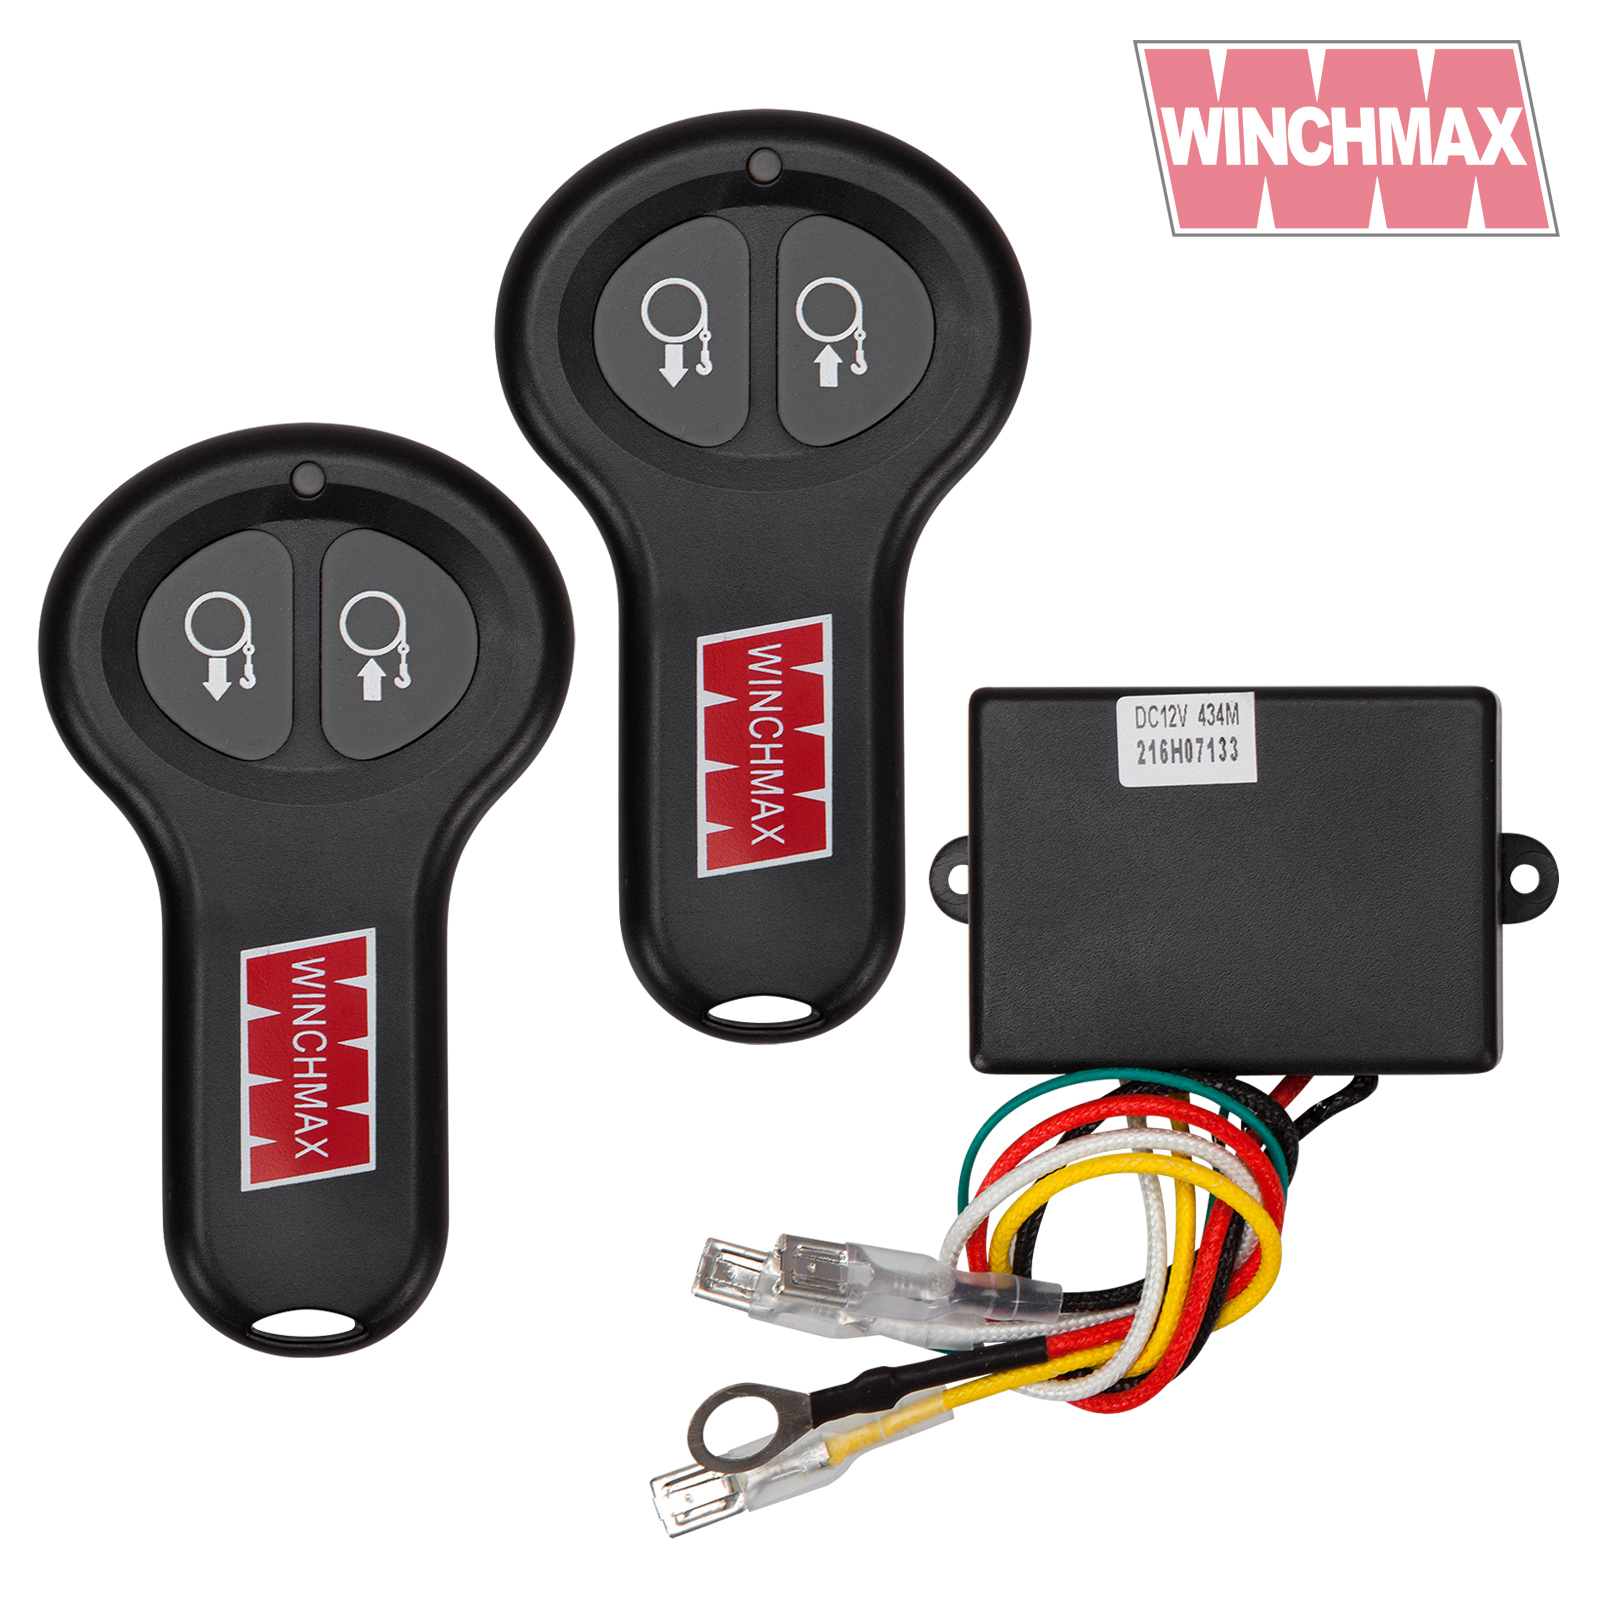 WINCHMAX 12v Wireless Remote Kit